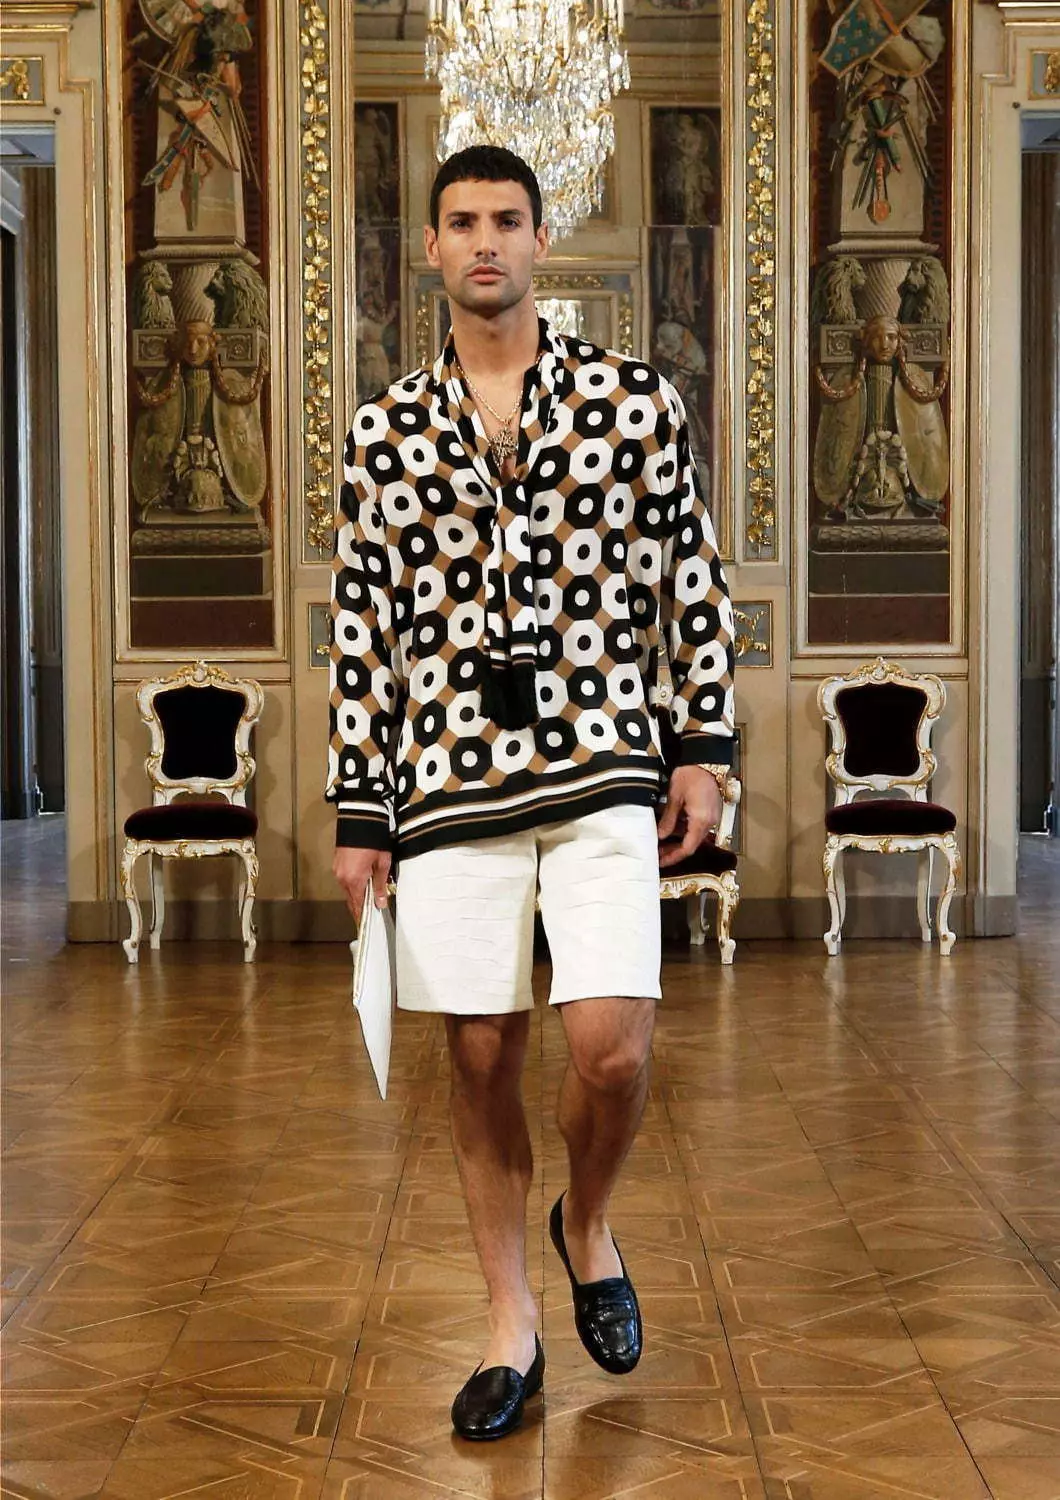 Dolce & Gabbana Alta Sartoria Menswear Collection กรกฎาคม 2020 53602_46